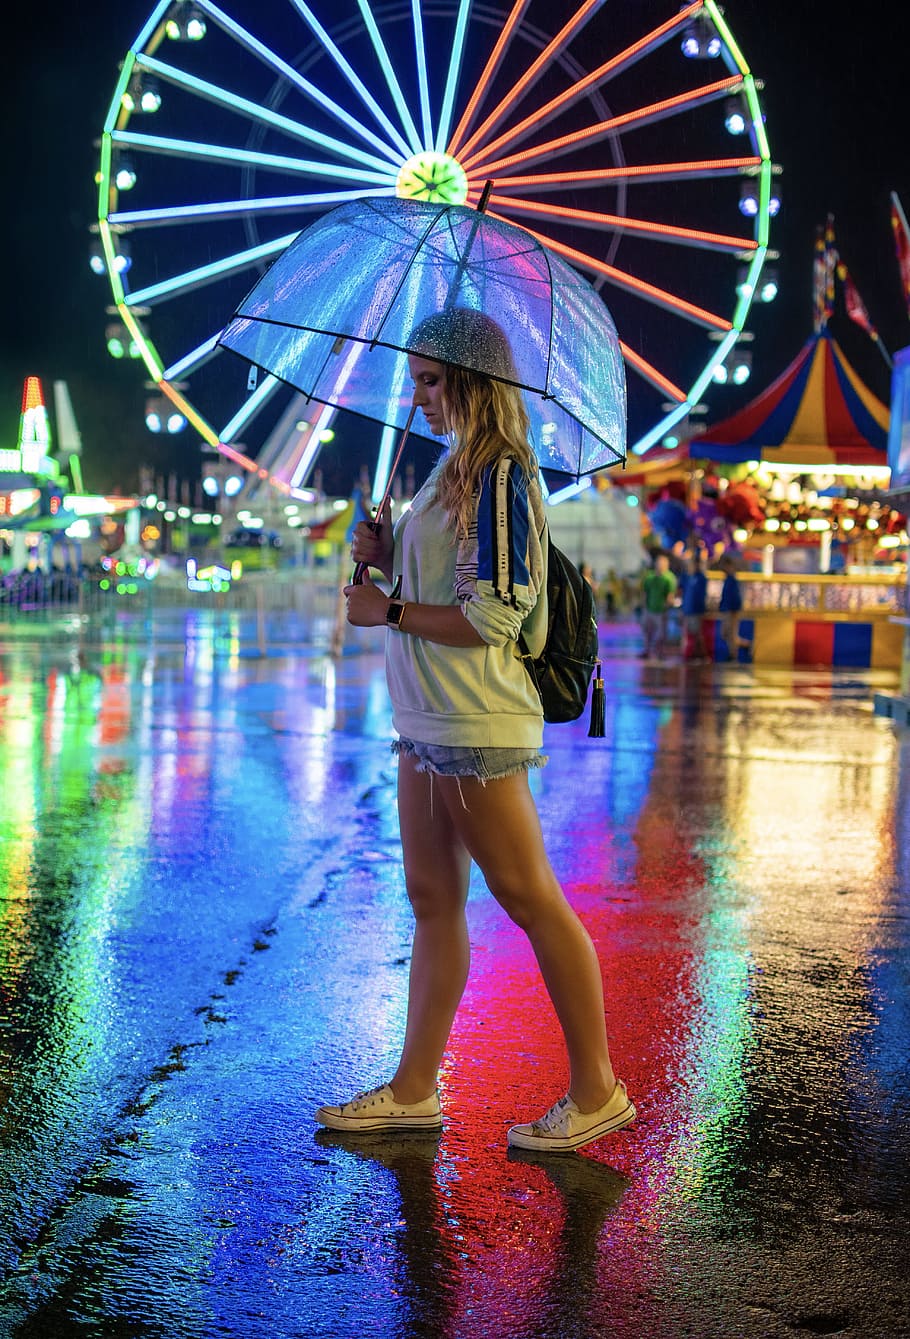 HD Wallpaper Woman Walking On Pavement Holding Umbrella Carnival